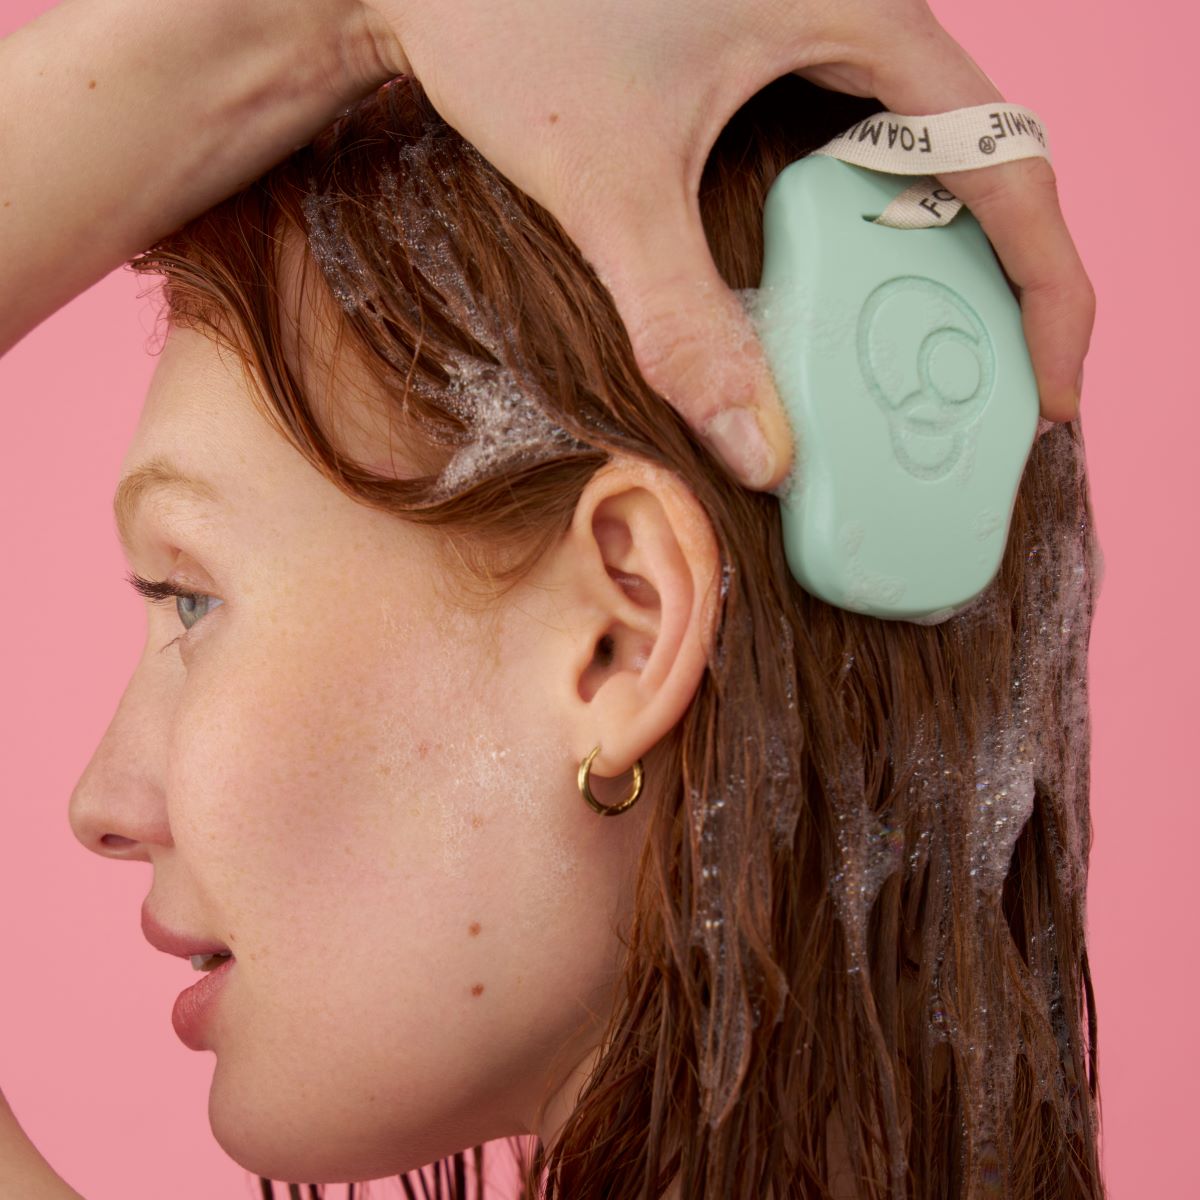 Festes Shampoo für trockenes Haar | Offizieller Foamie Online Shop – Foamie  – Offizieller Online Shop